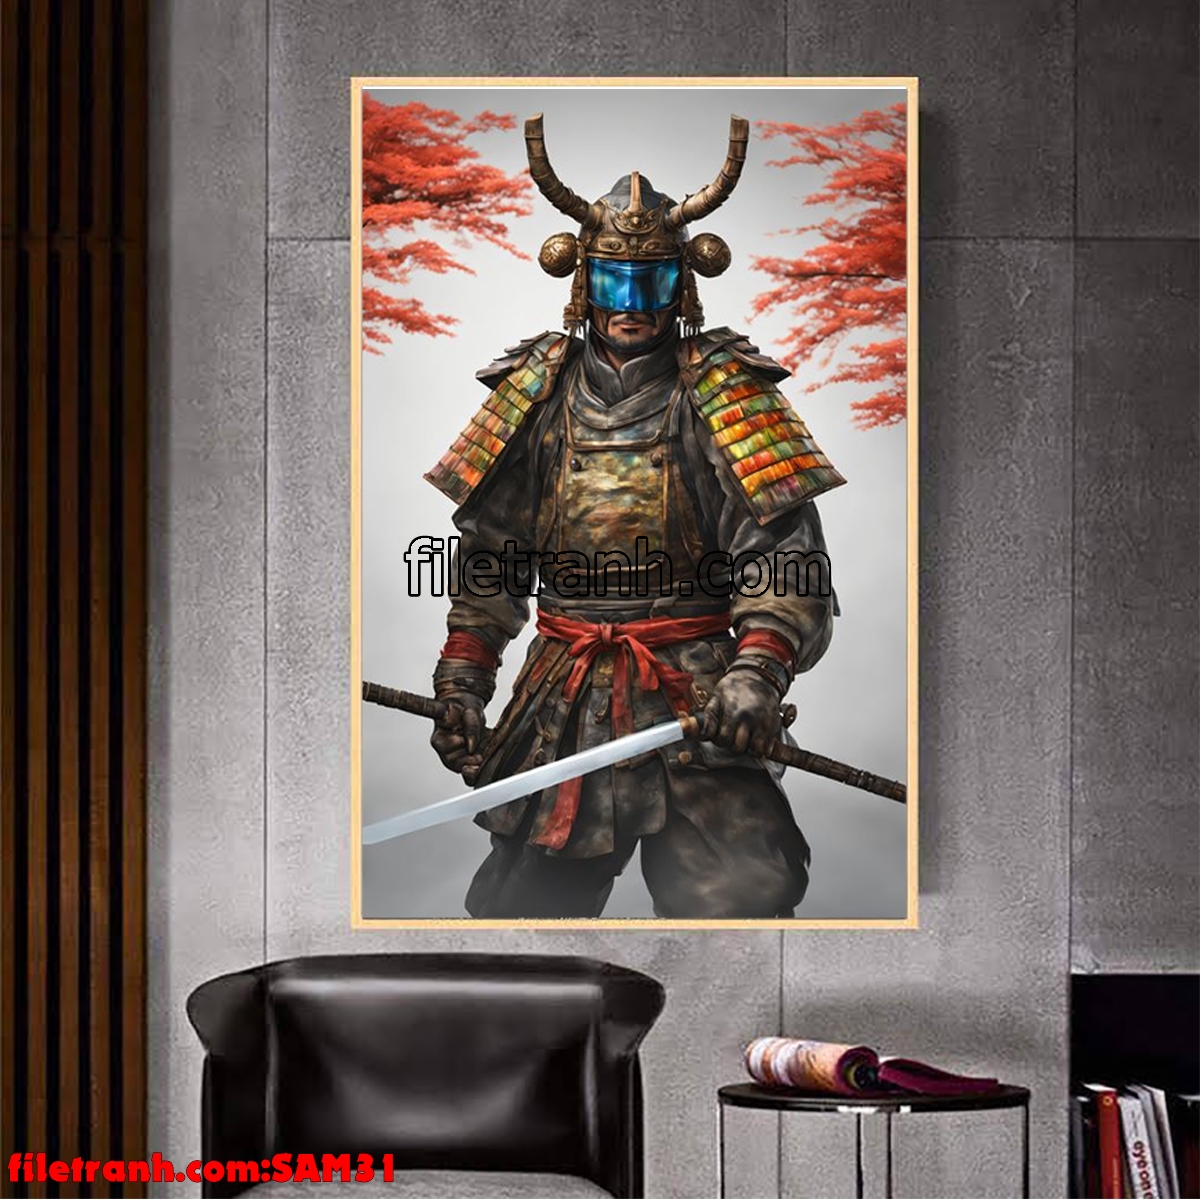 https://filetranh.com/tuong-nen/file-tranh-samurai-vo-si-nhat-ban-sam31.html